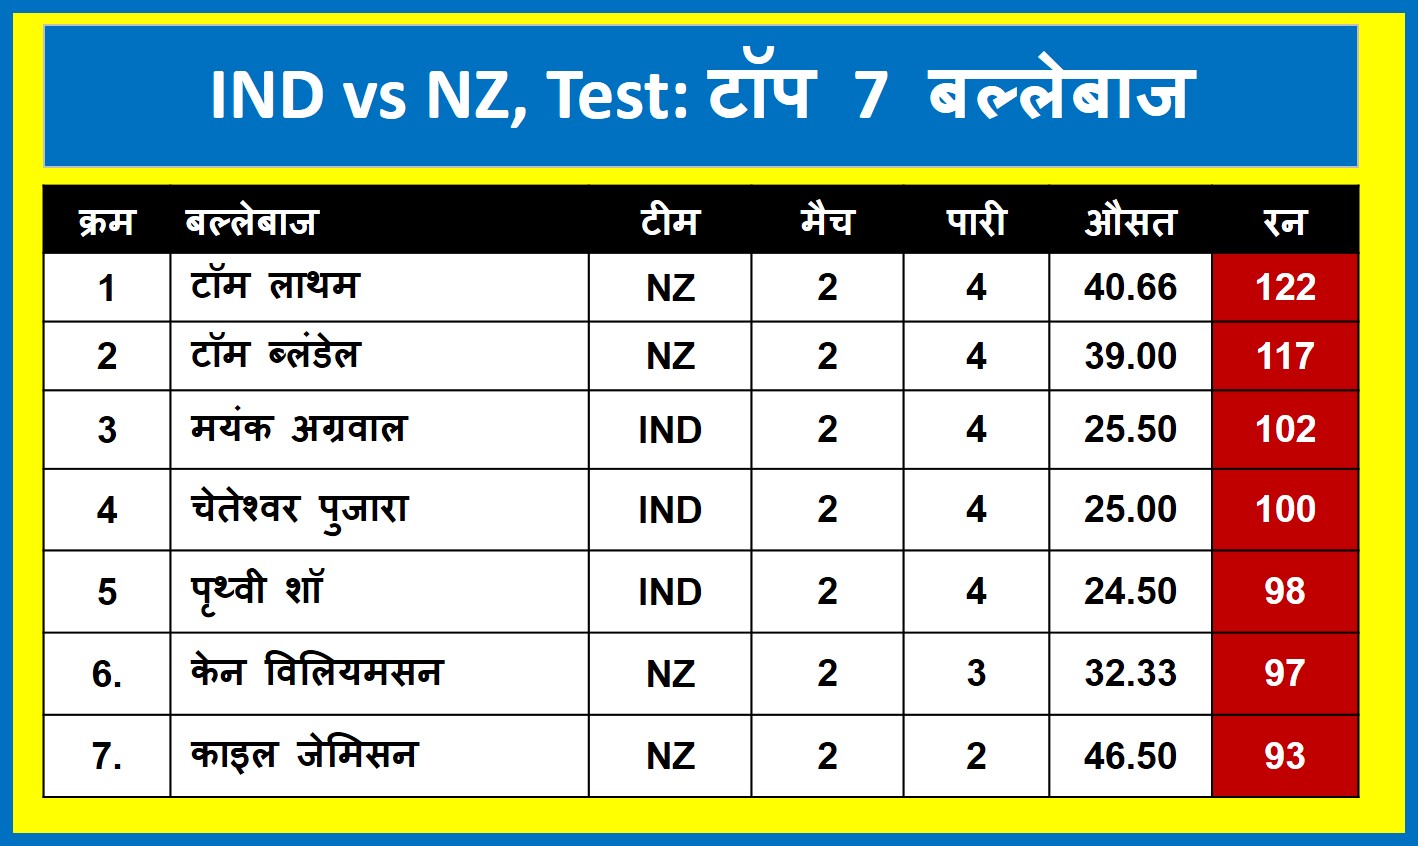 India vs New Zealand Test series: Top 7 batsman